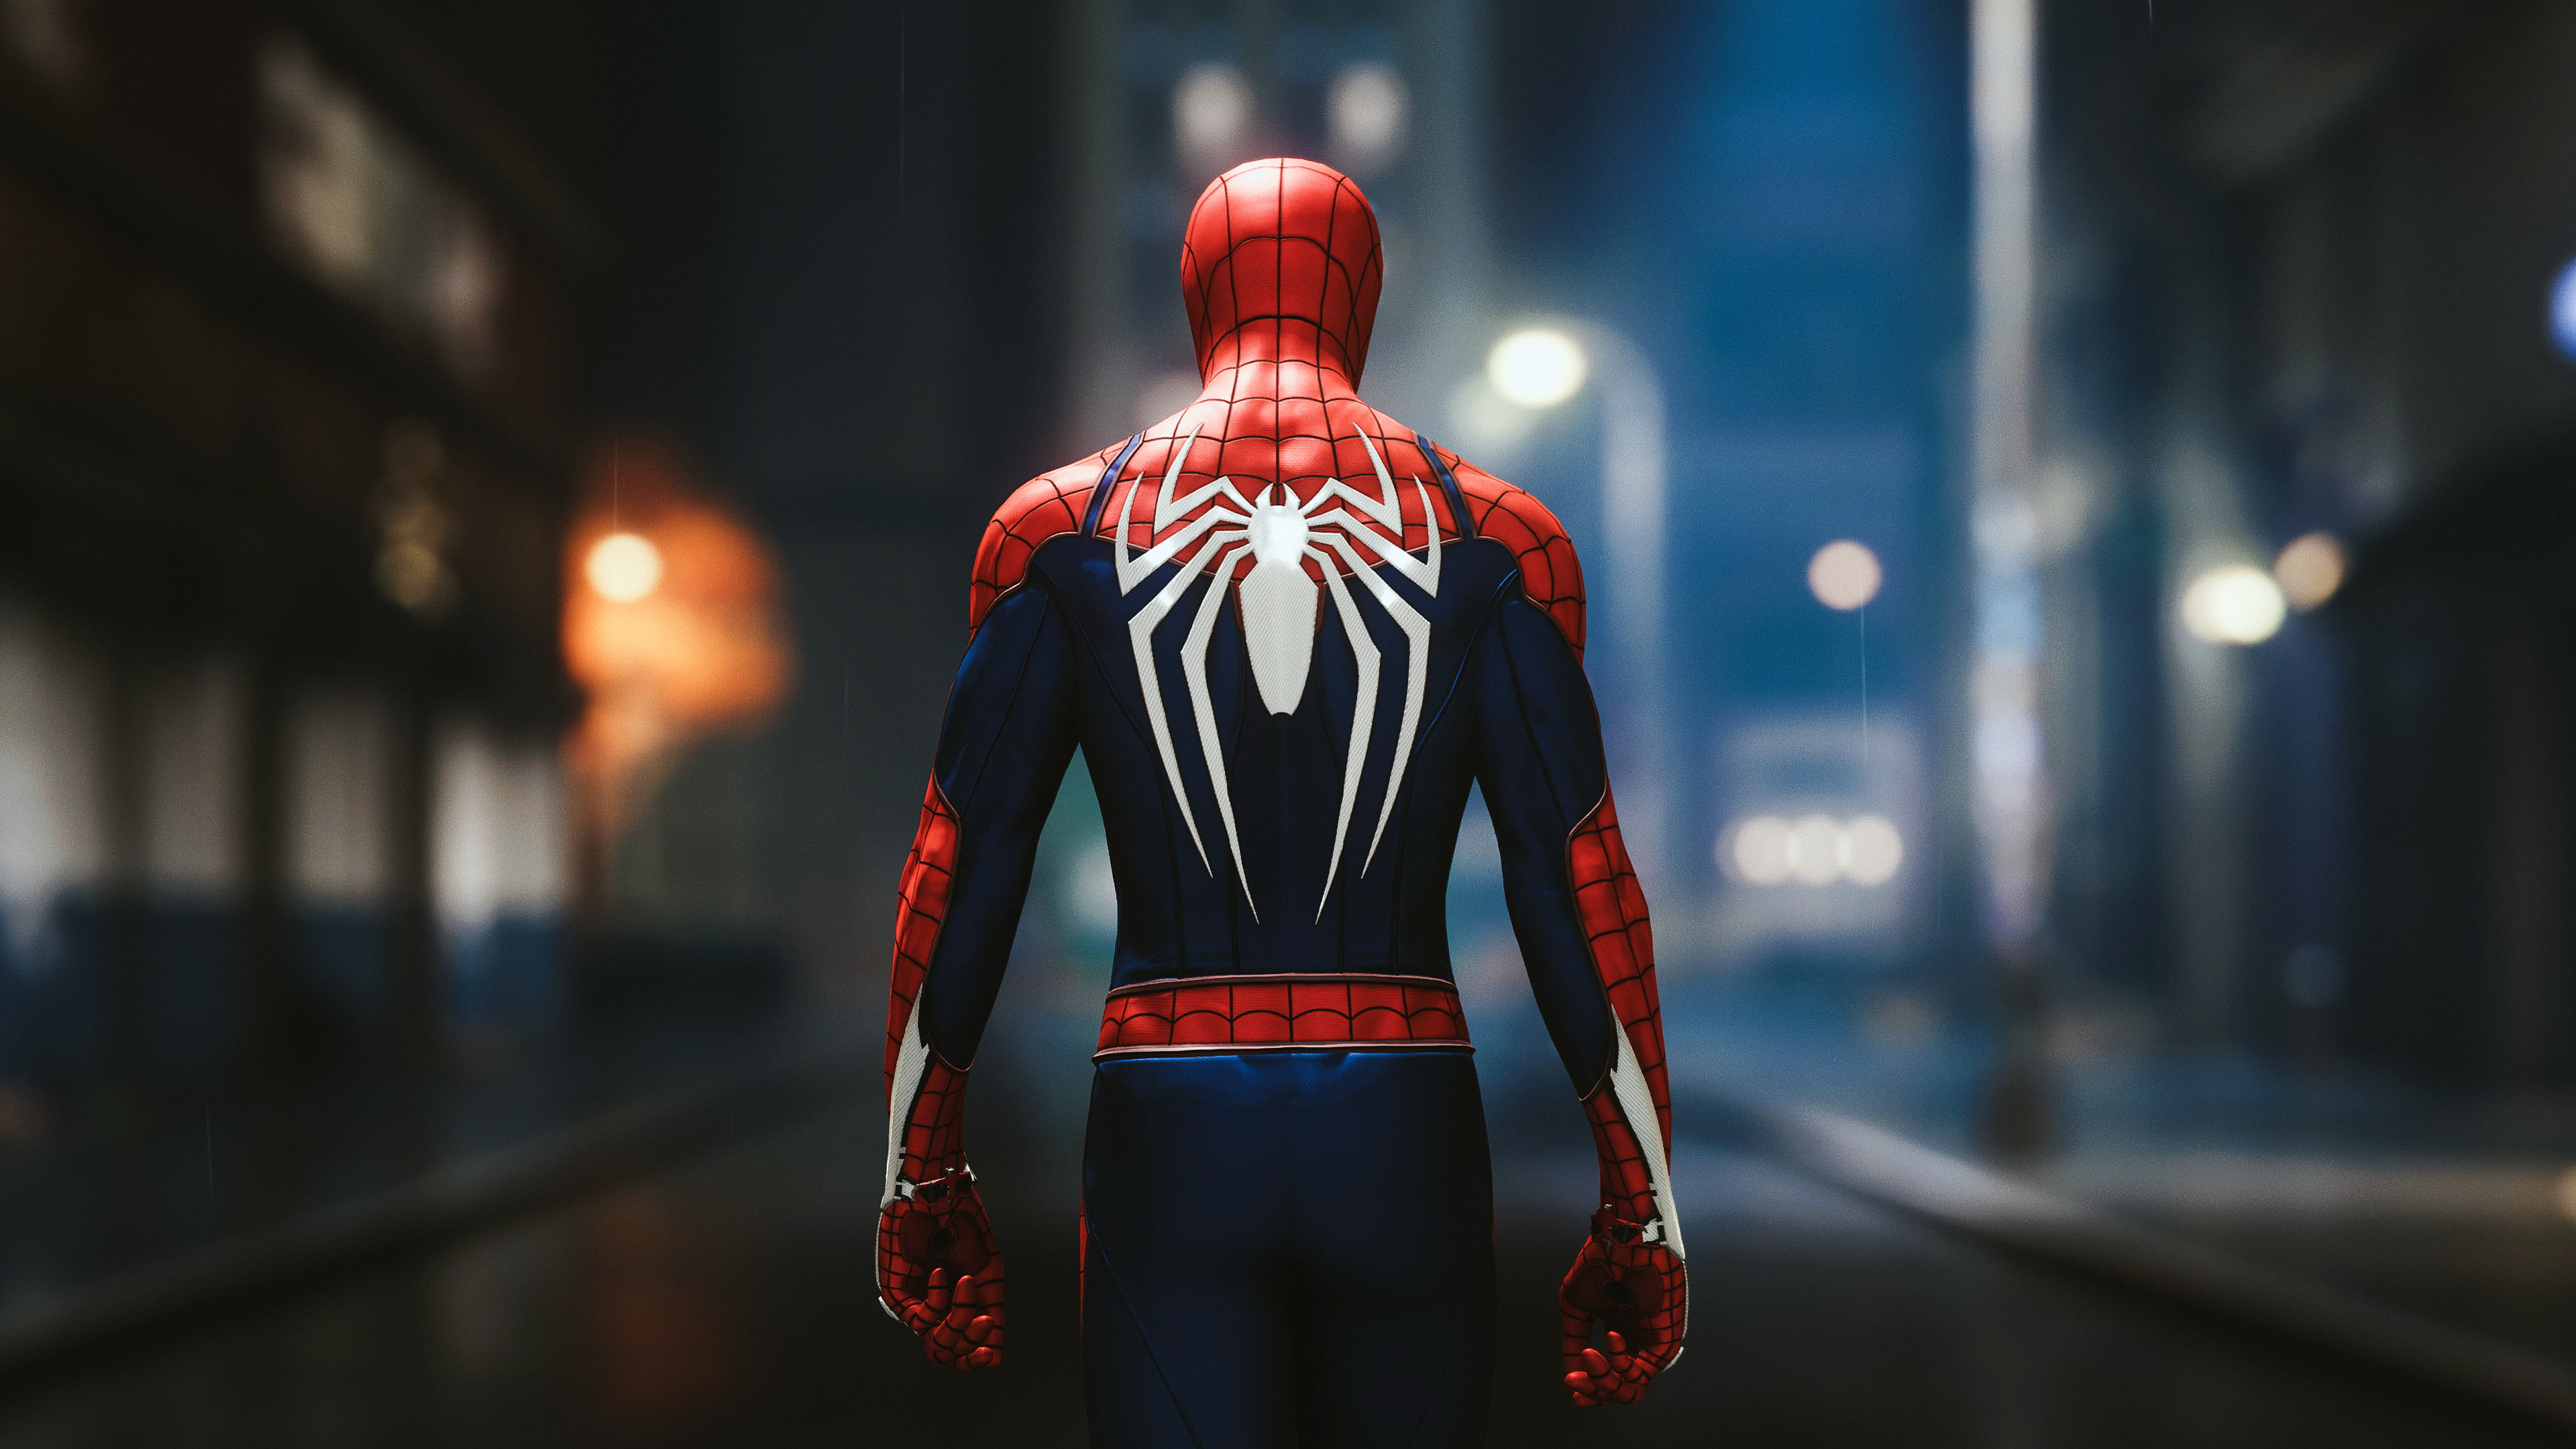 Spider Man Fictional Superhero in Movie 4K Photo